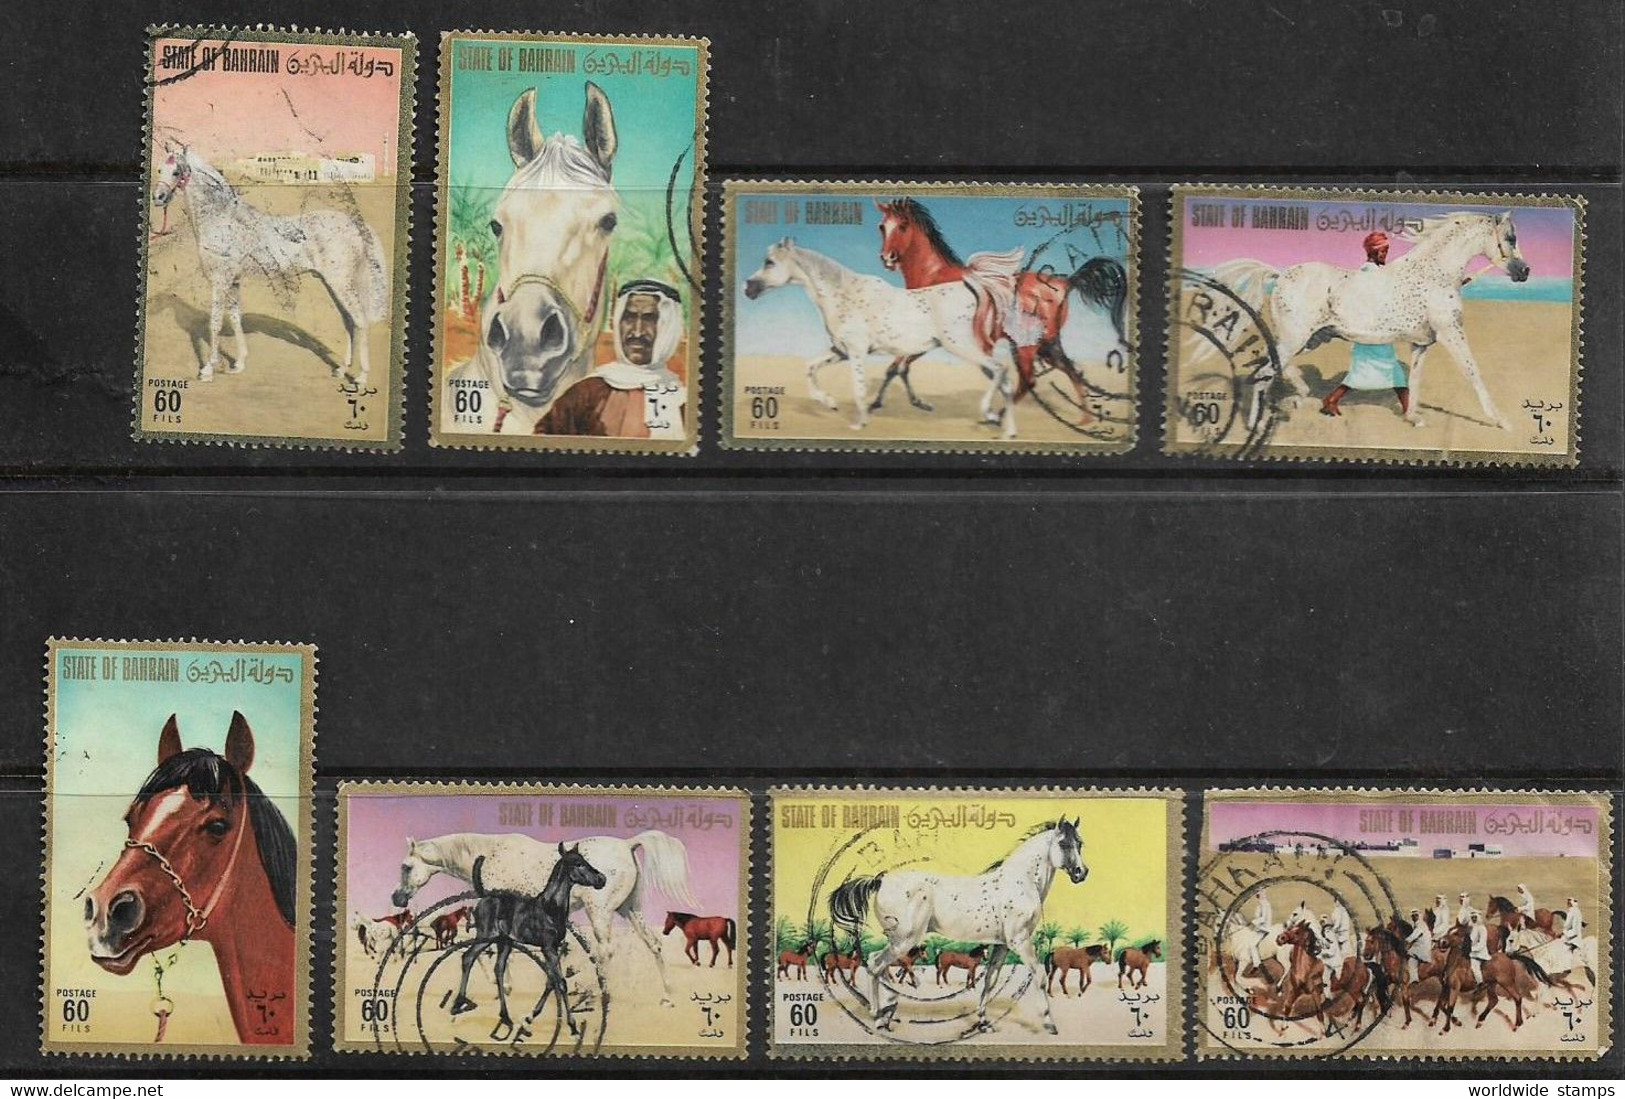 Bahrain 1975 Arabian Horses Scott #224a-h Used Stamp Very Fine Used - Bahrain (1965-...)